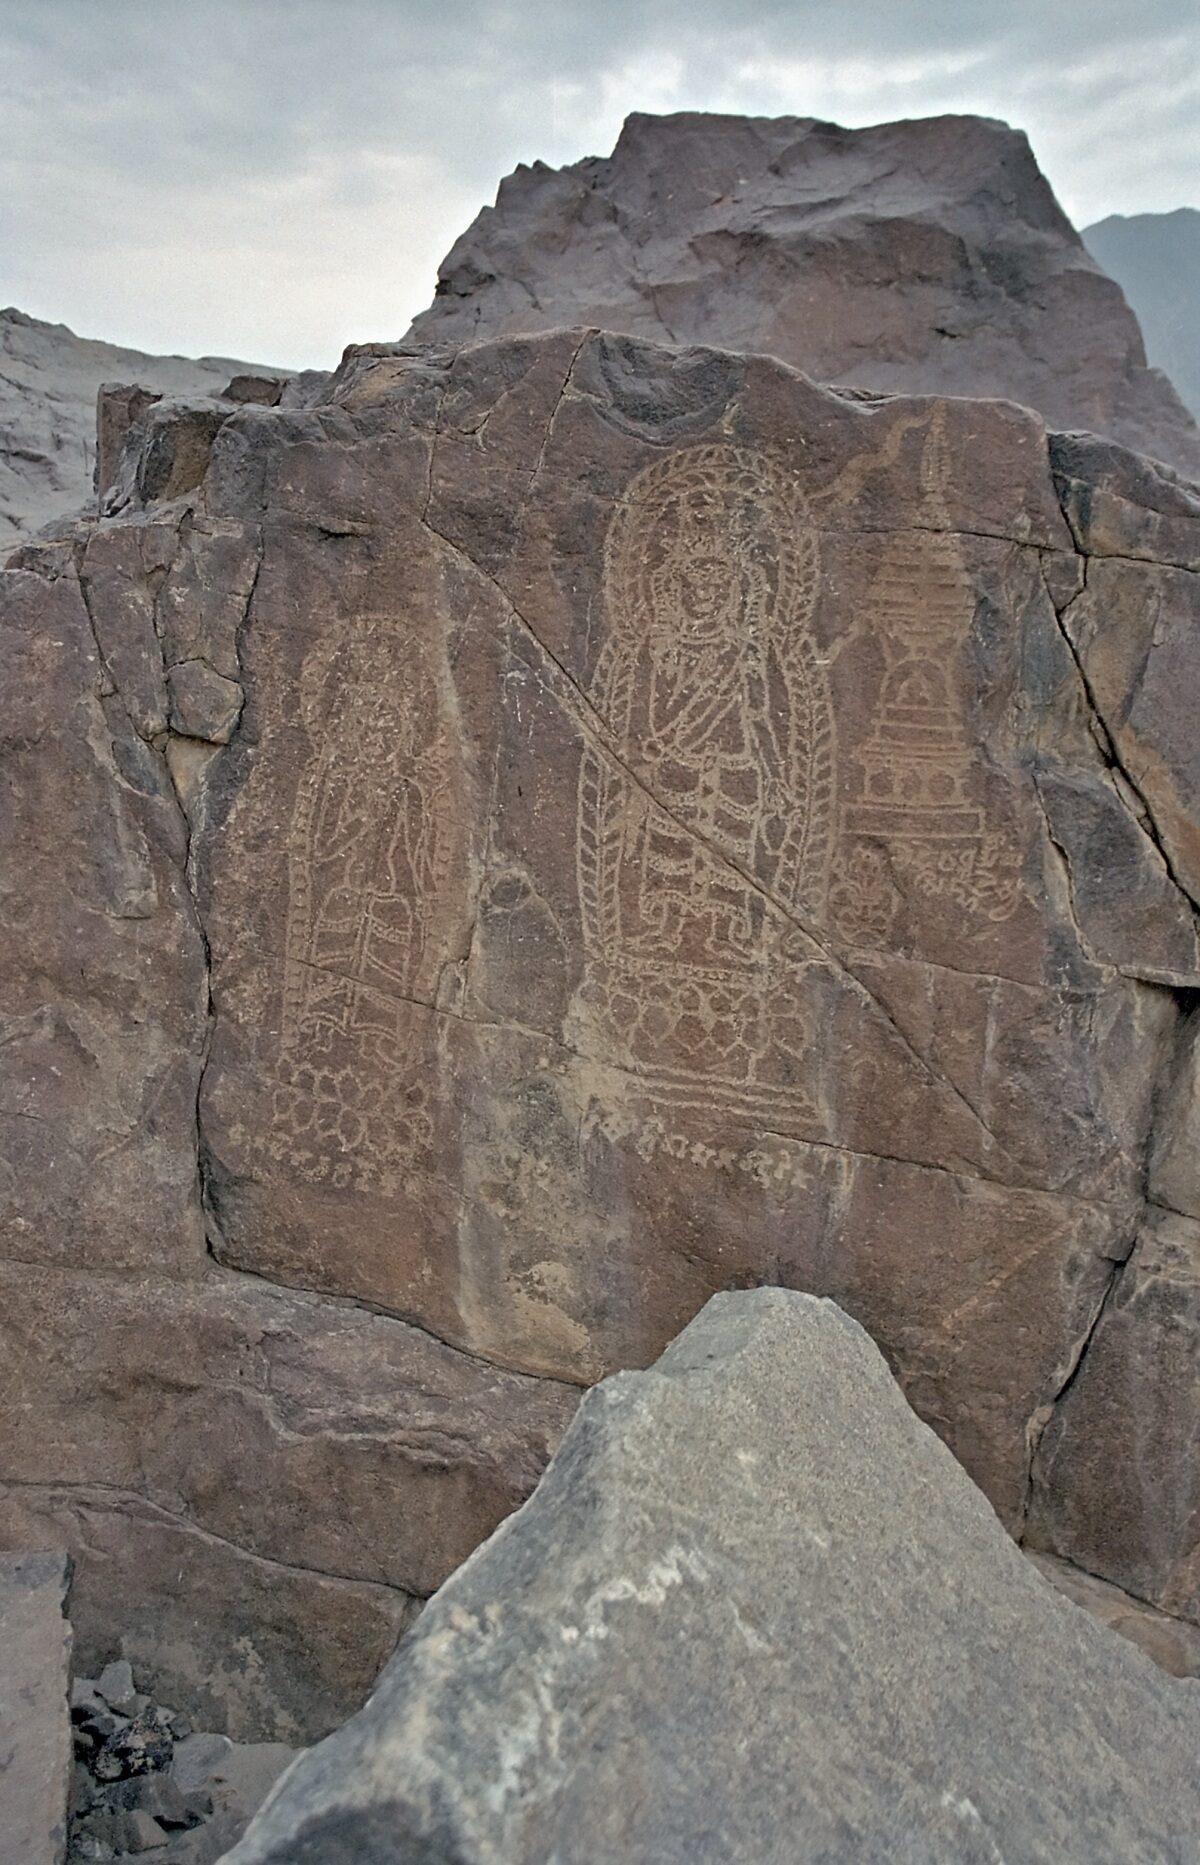 Buddhist petroglyphs near Chilas in Diamer district in Gilgit-Baltistan. (CC BY-SA 3.0/Wikimedia Commons)